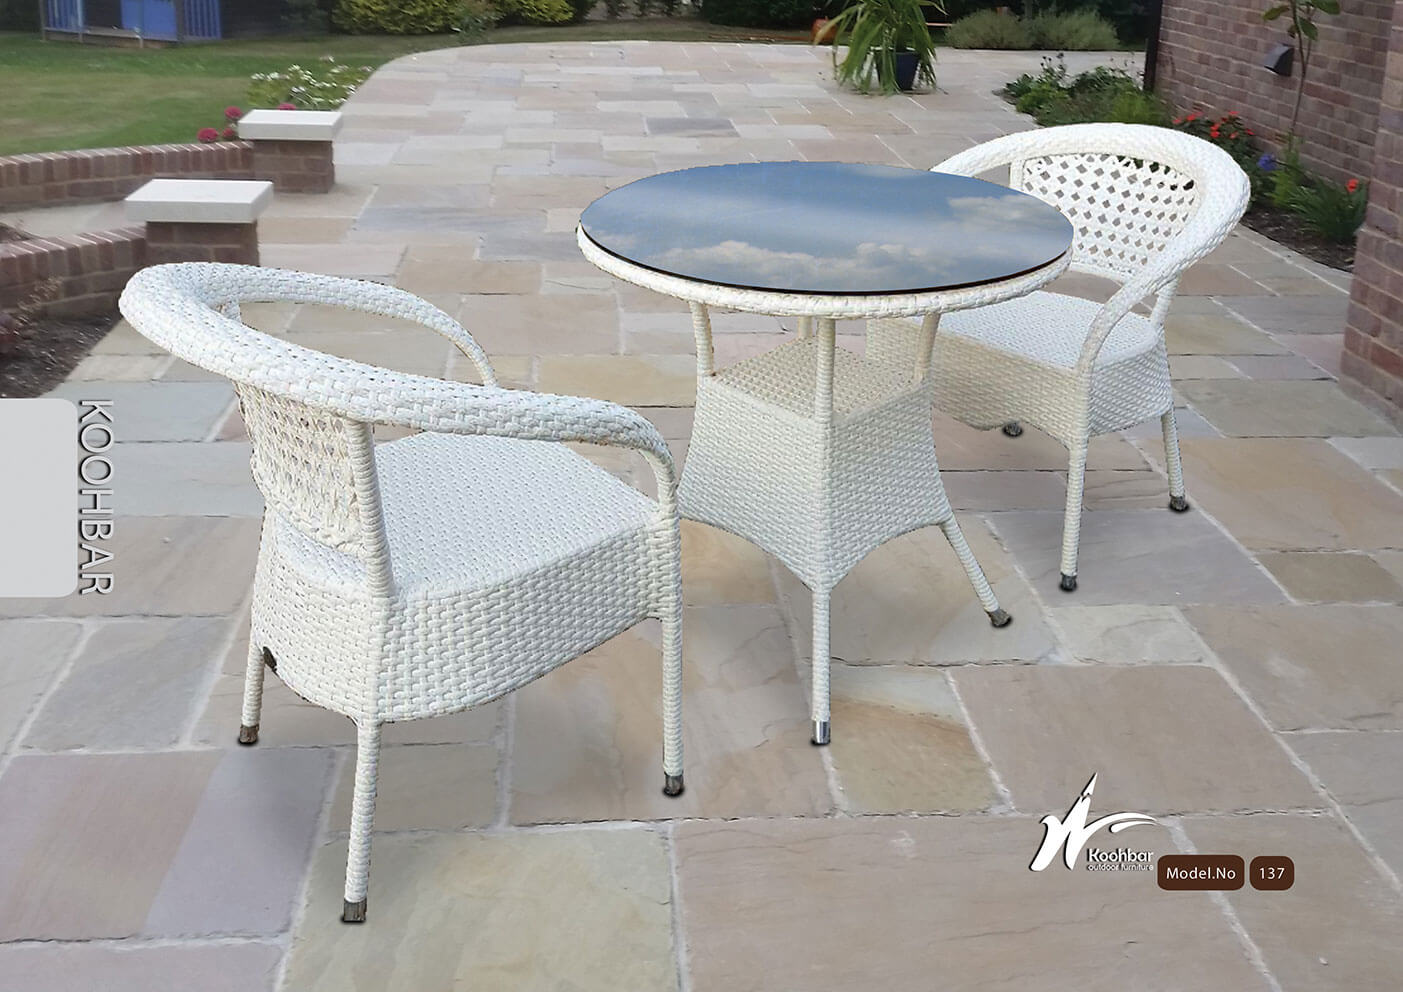 kohbar patio conversation sets 137 model0 - ست میز صندلی حصیری فضای باز کوهبر مدل ۱۳۷ -  - patio-dining-furniture